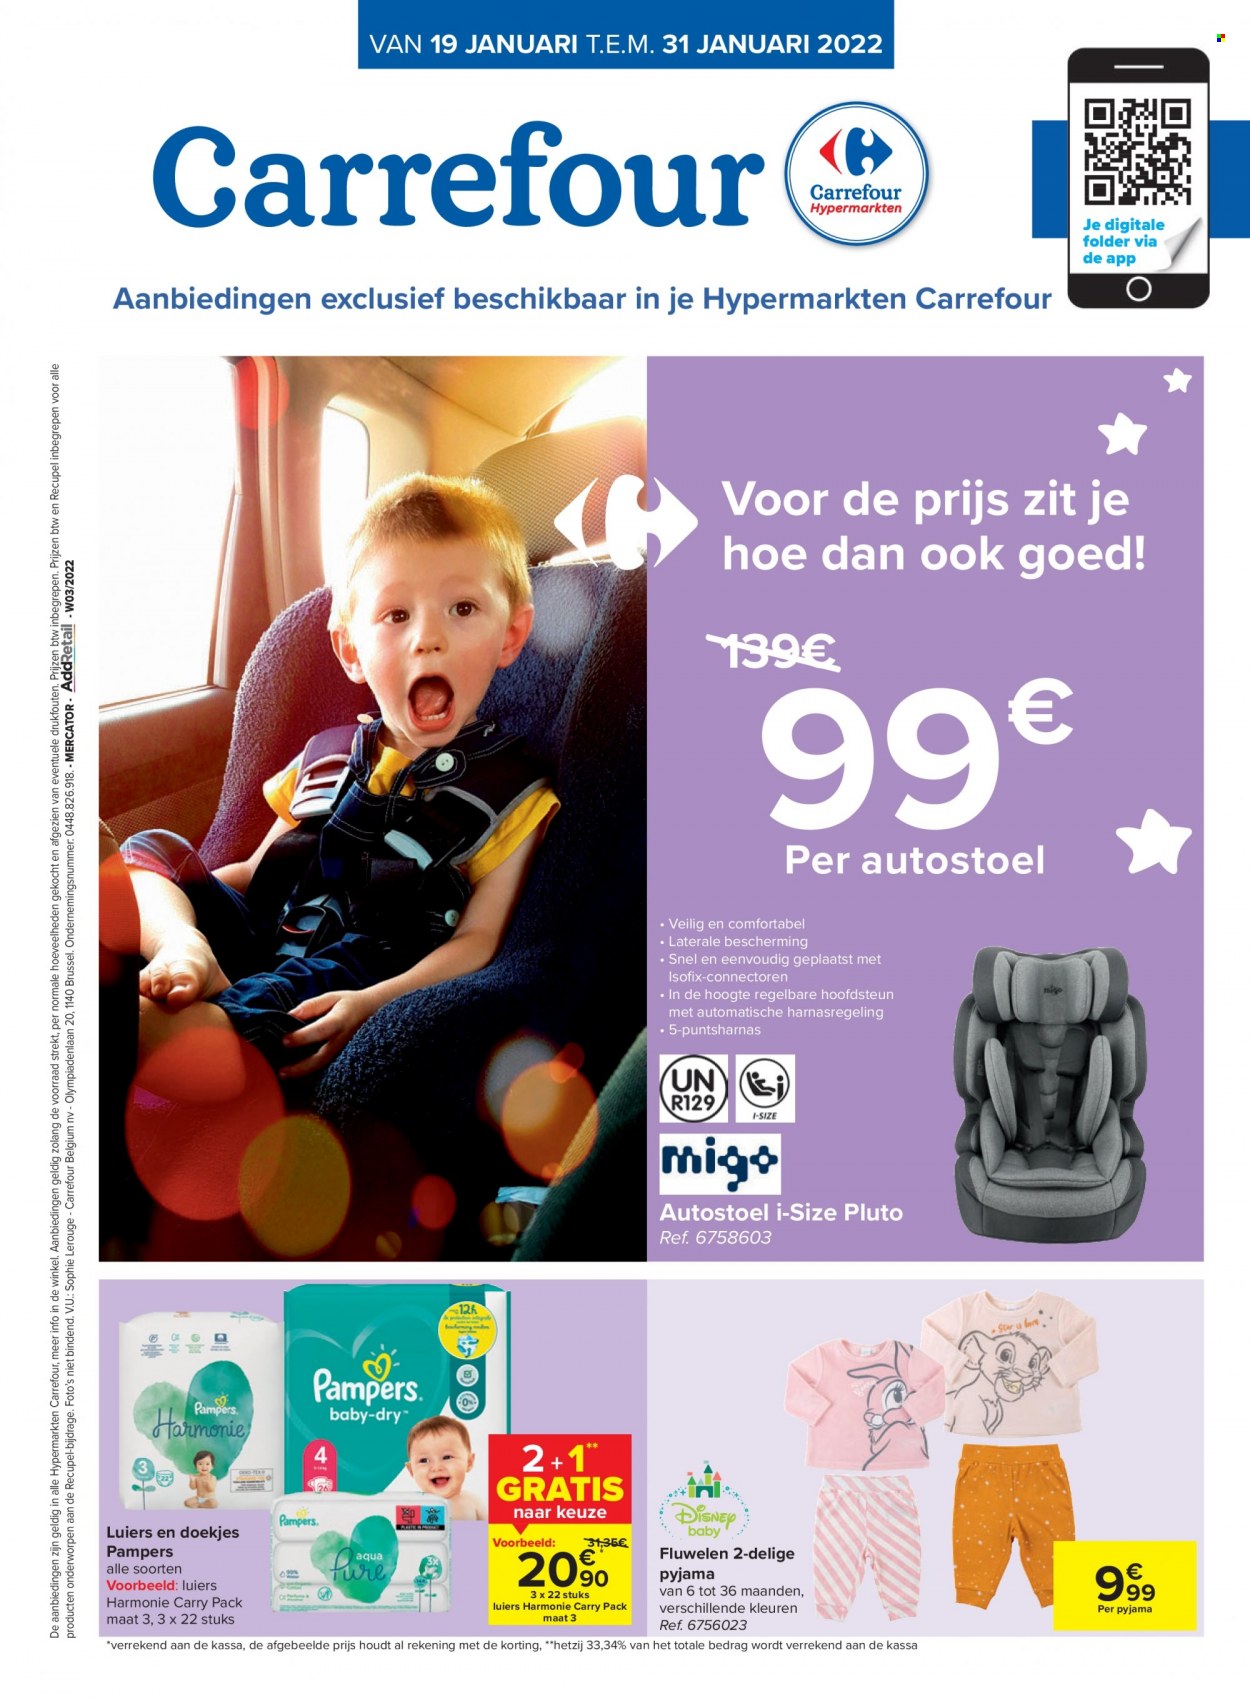 thumbnail - Catalogue Carrefour hypermarkt - 19/01/2022 - 31/01/2022 - Produits soldés - Pampers, pyjama. Page 1.